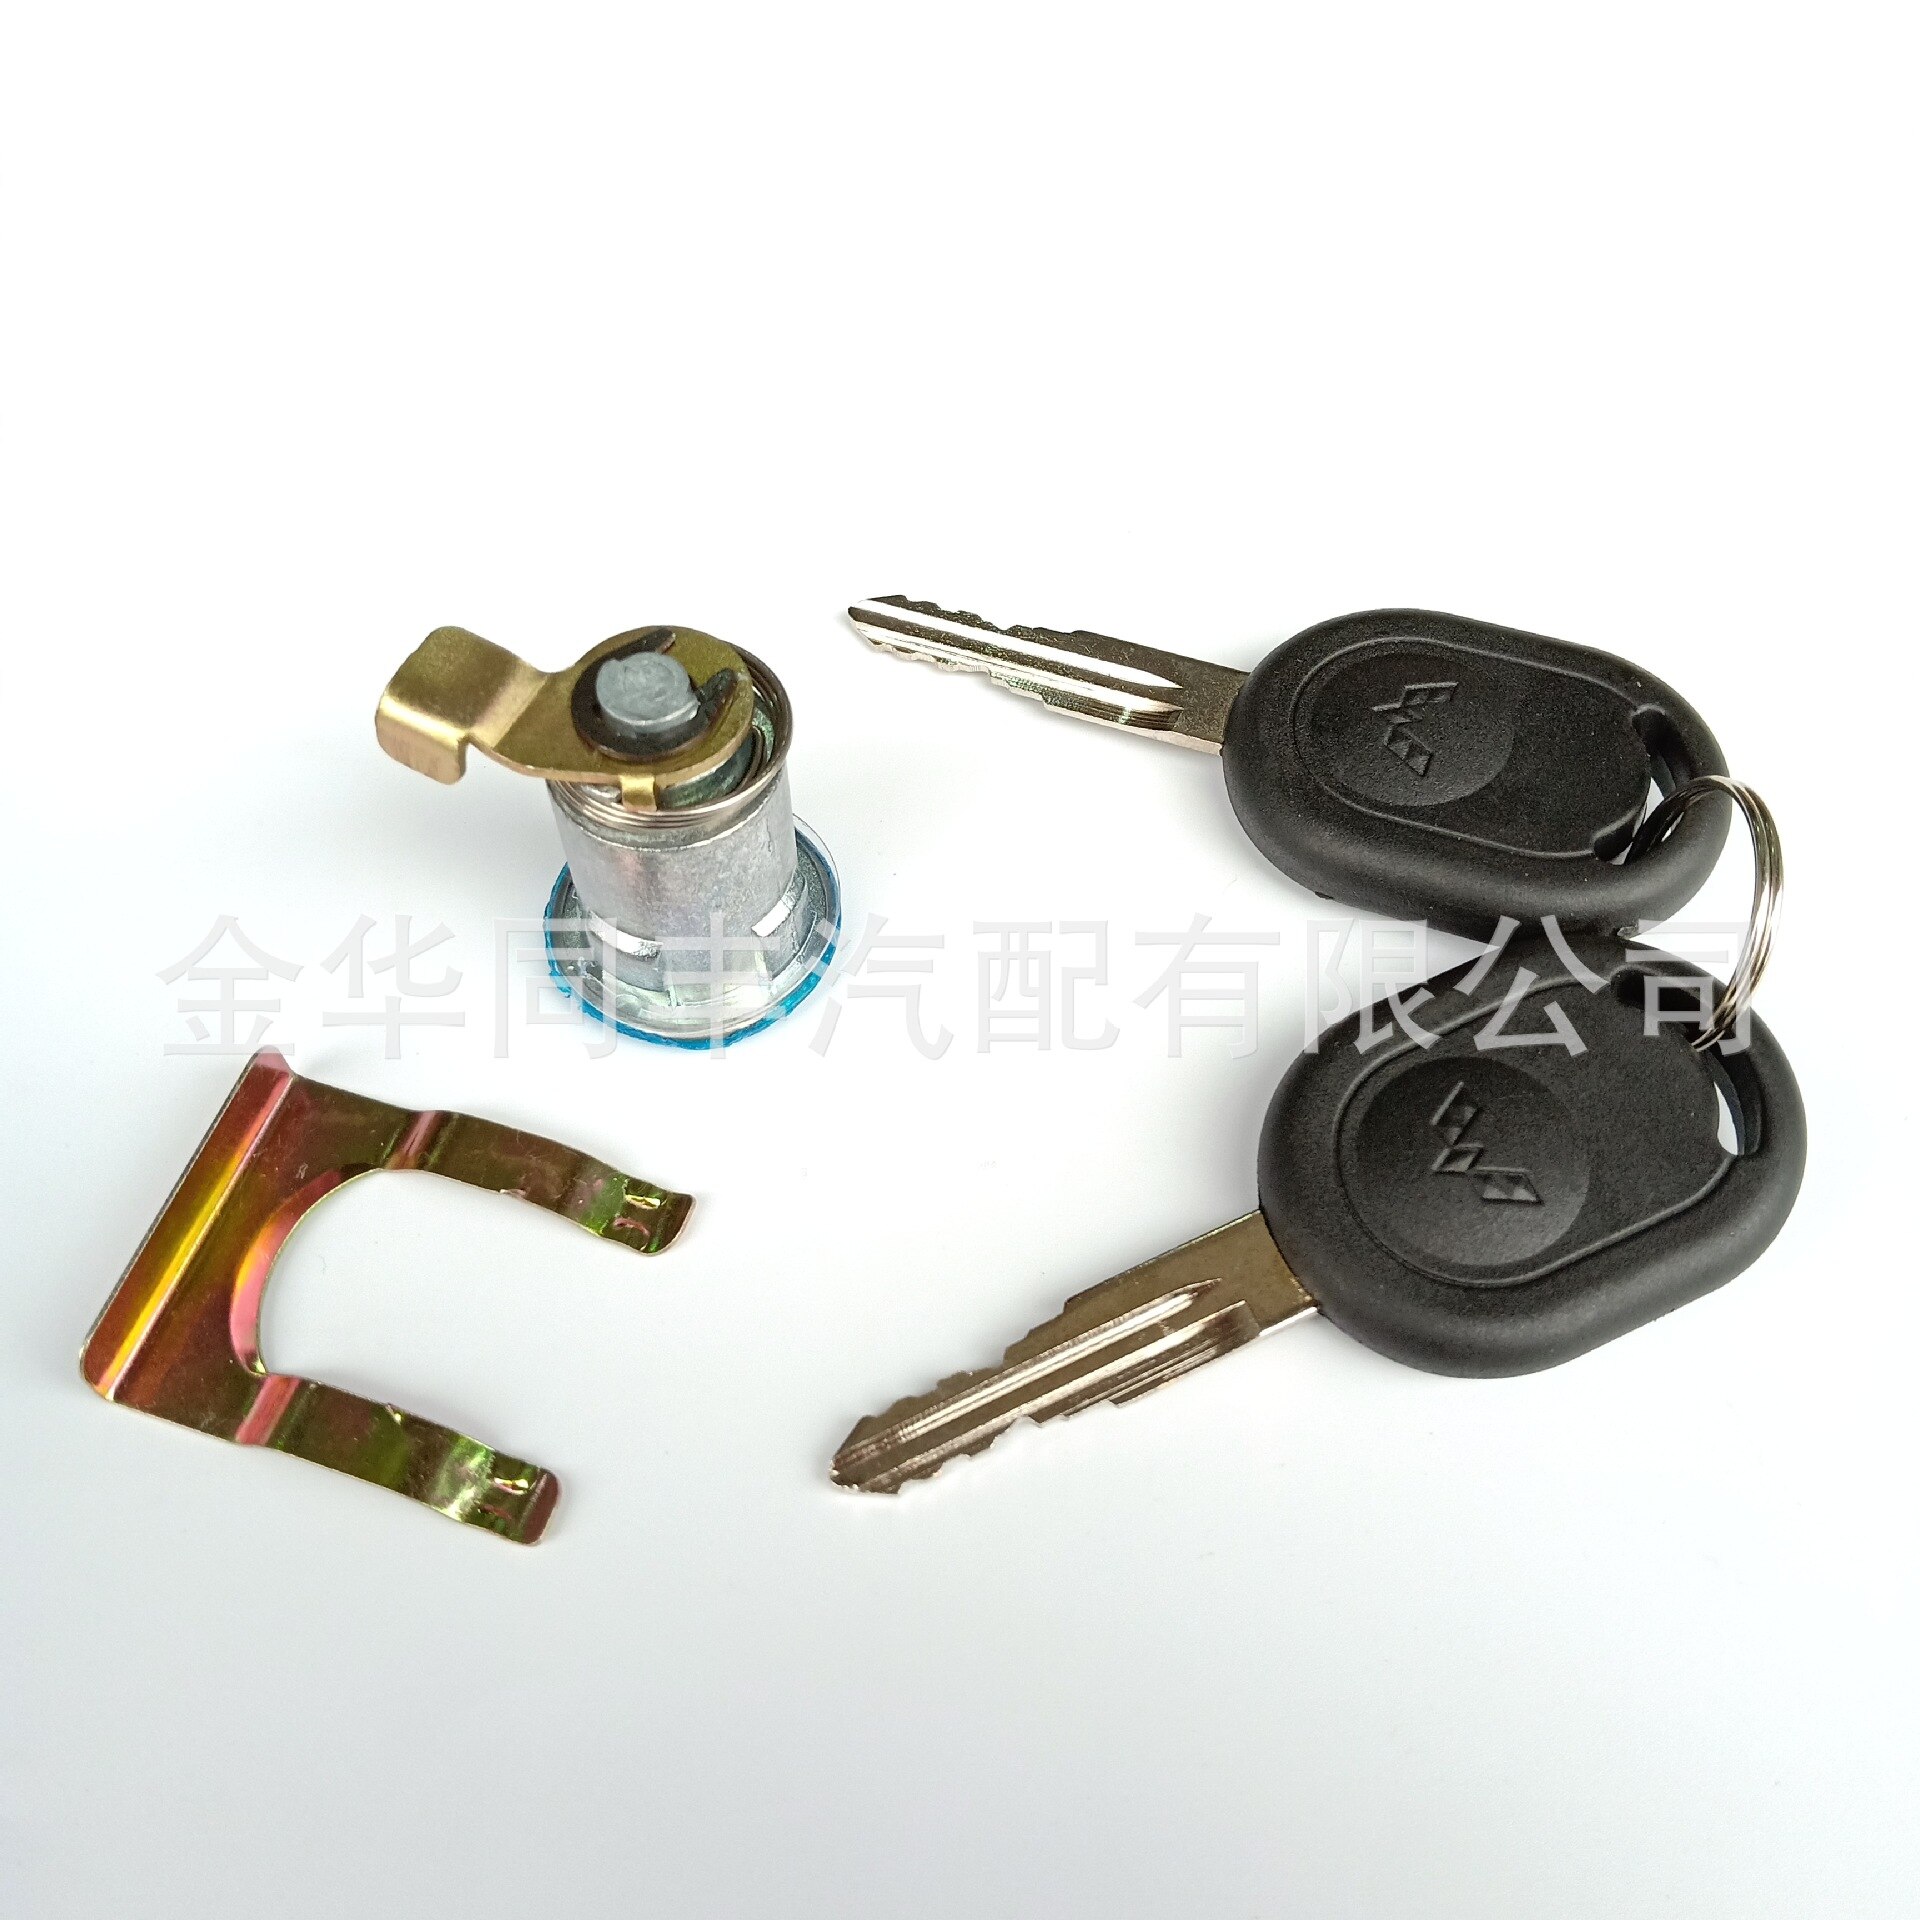 Hongguang & amp; hongguang s oliekasse låsecylinder brændstoftankdæksel låsecylinder oprindelig understøttende fabrikspris